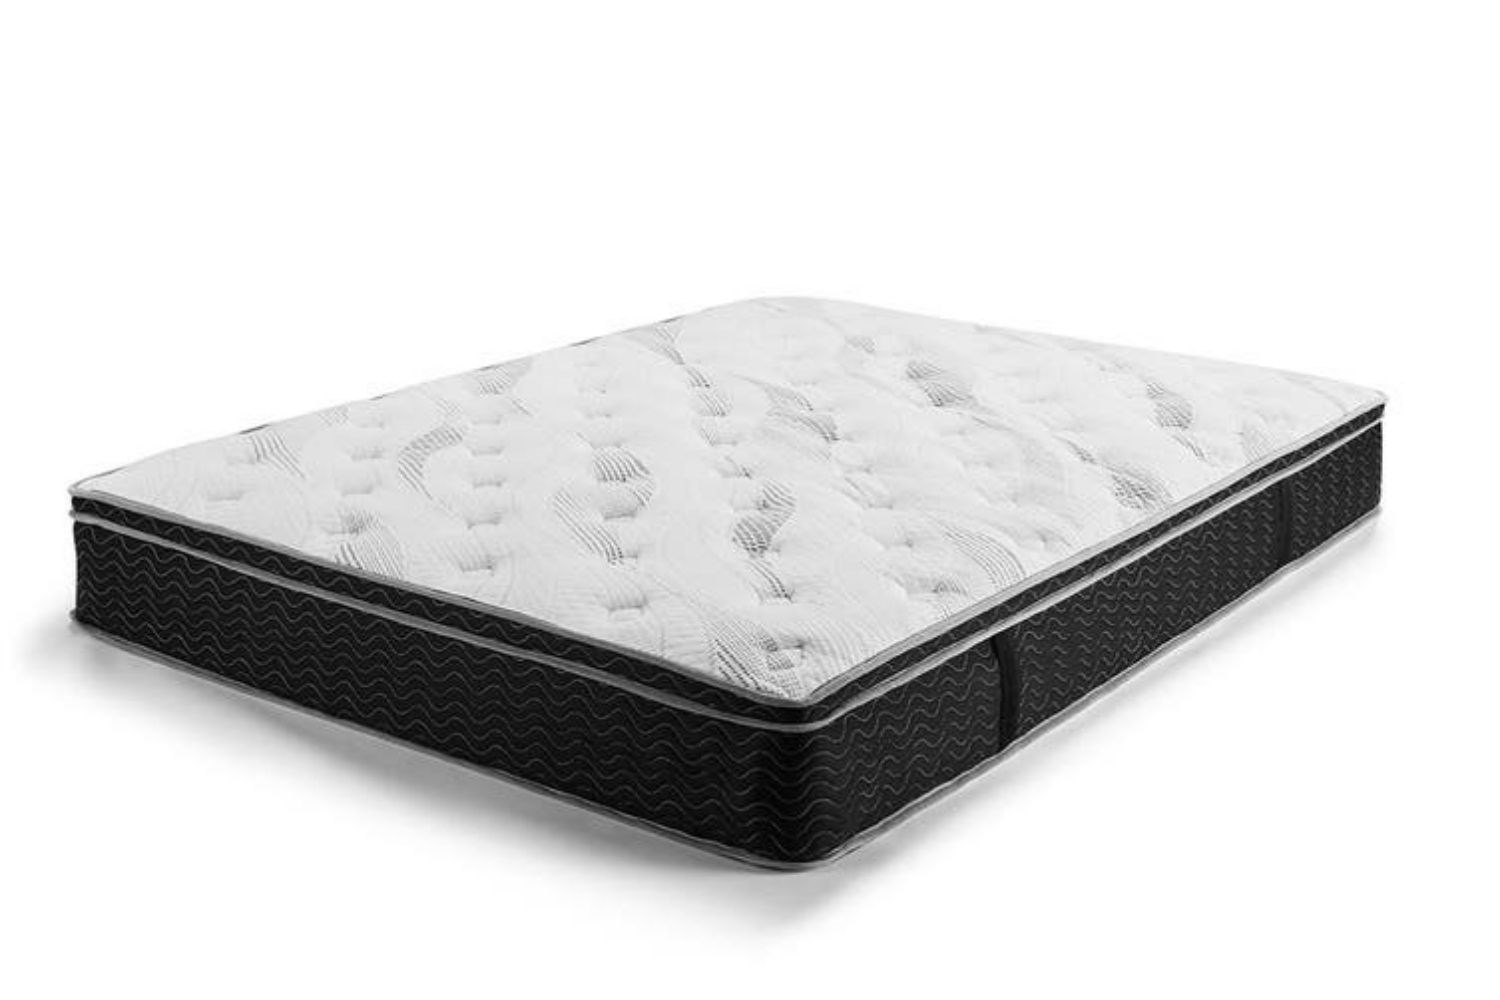 homedics restore 11 gel memory foam mattress reviews